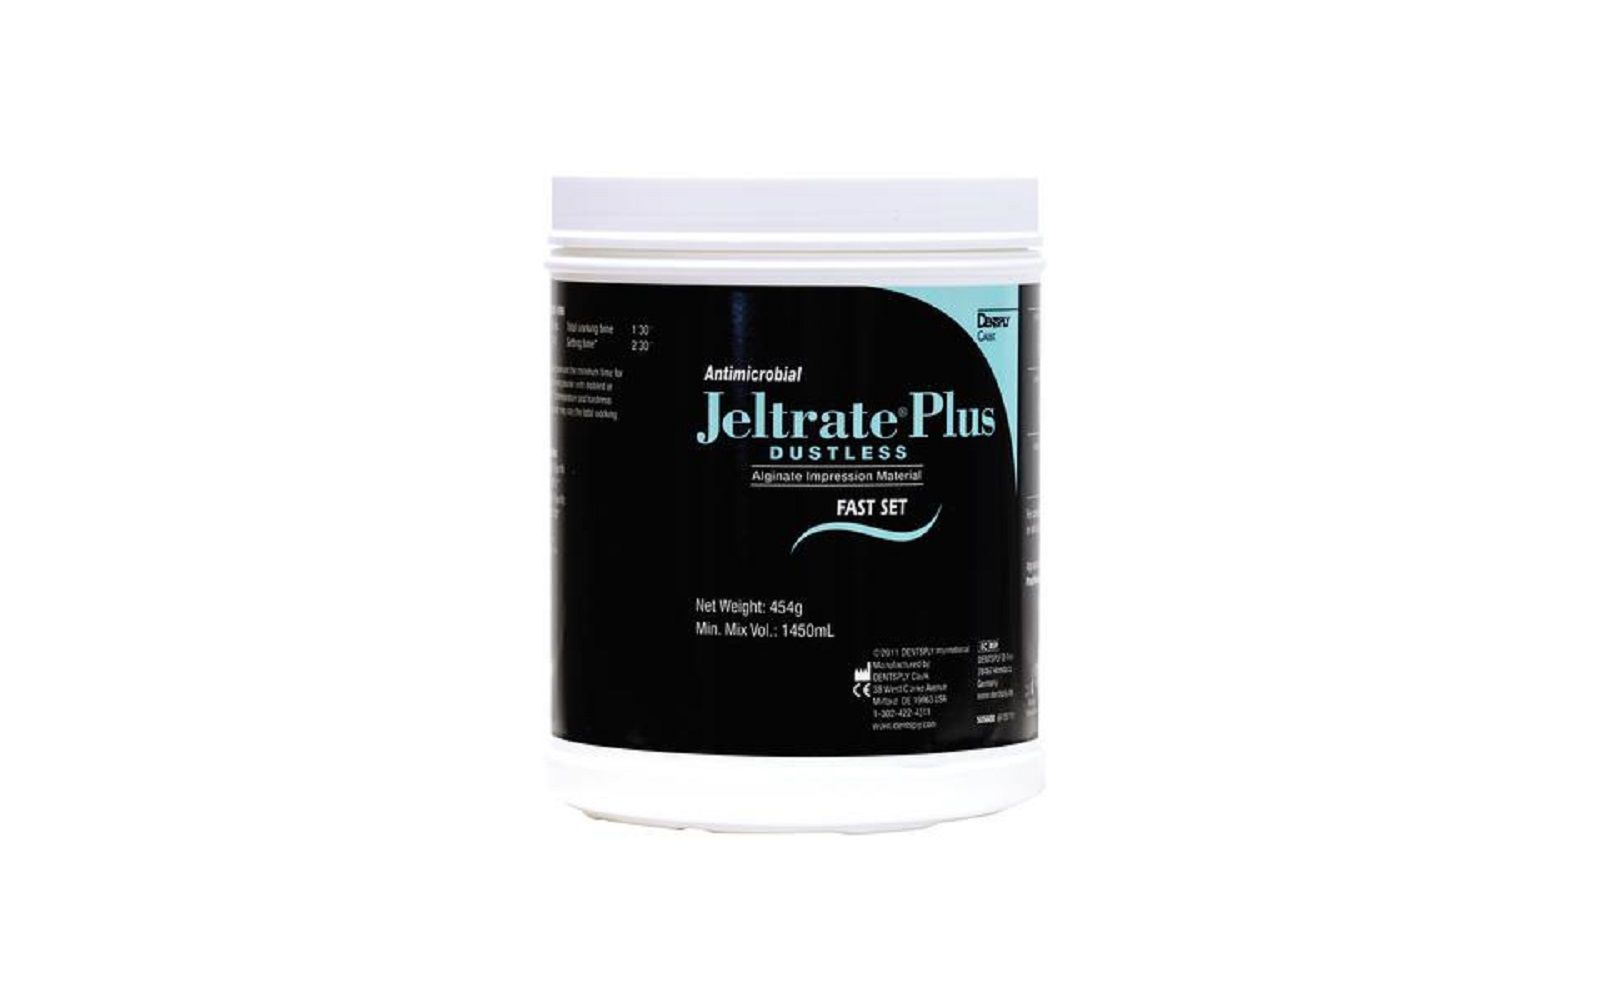 Jeltrate® plus – antimicrobial, dustless, alginate impression material, 1 lb canister - dentsply caulk